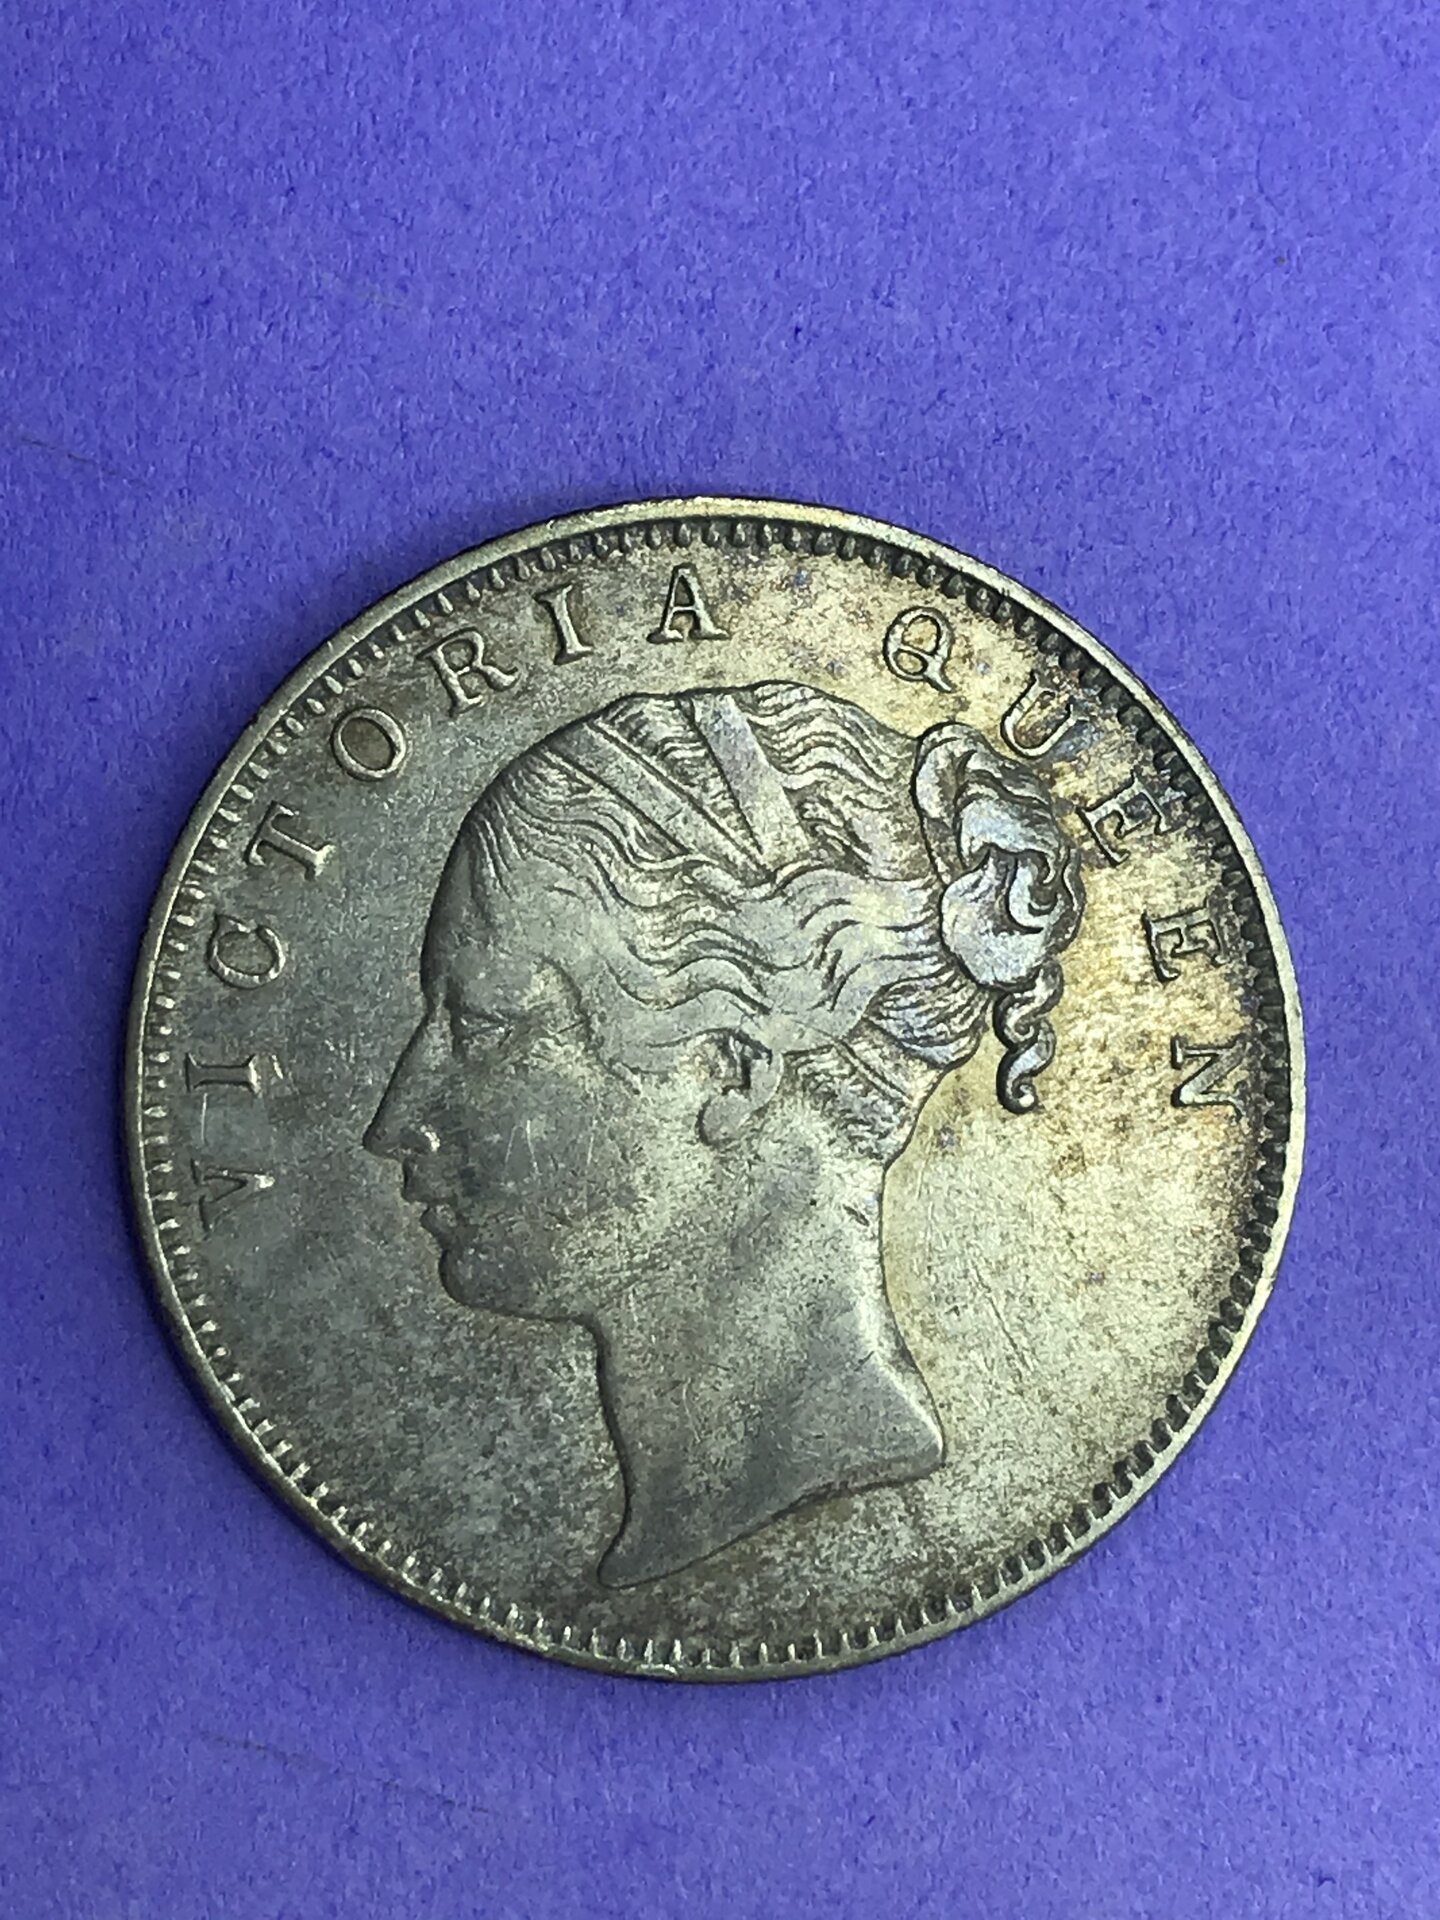 India-1840 rupee-obv.JPG